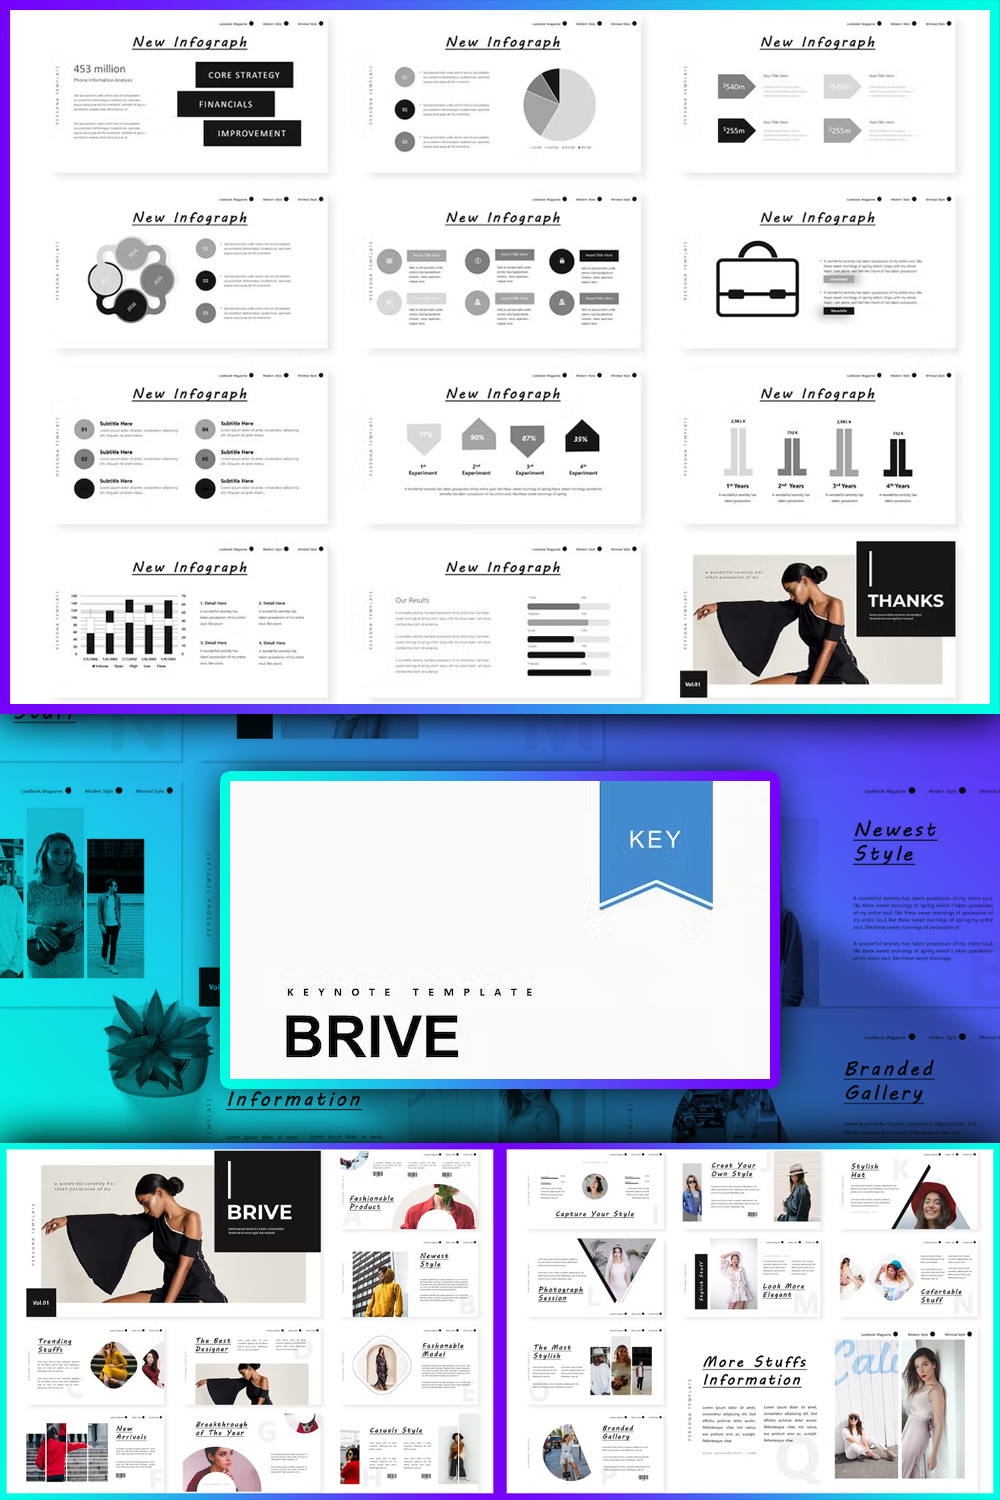 Brive | Keynote Template - Pinterest.